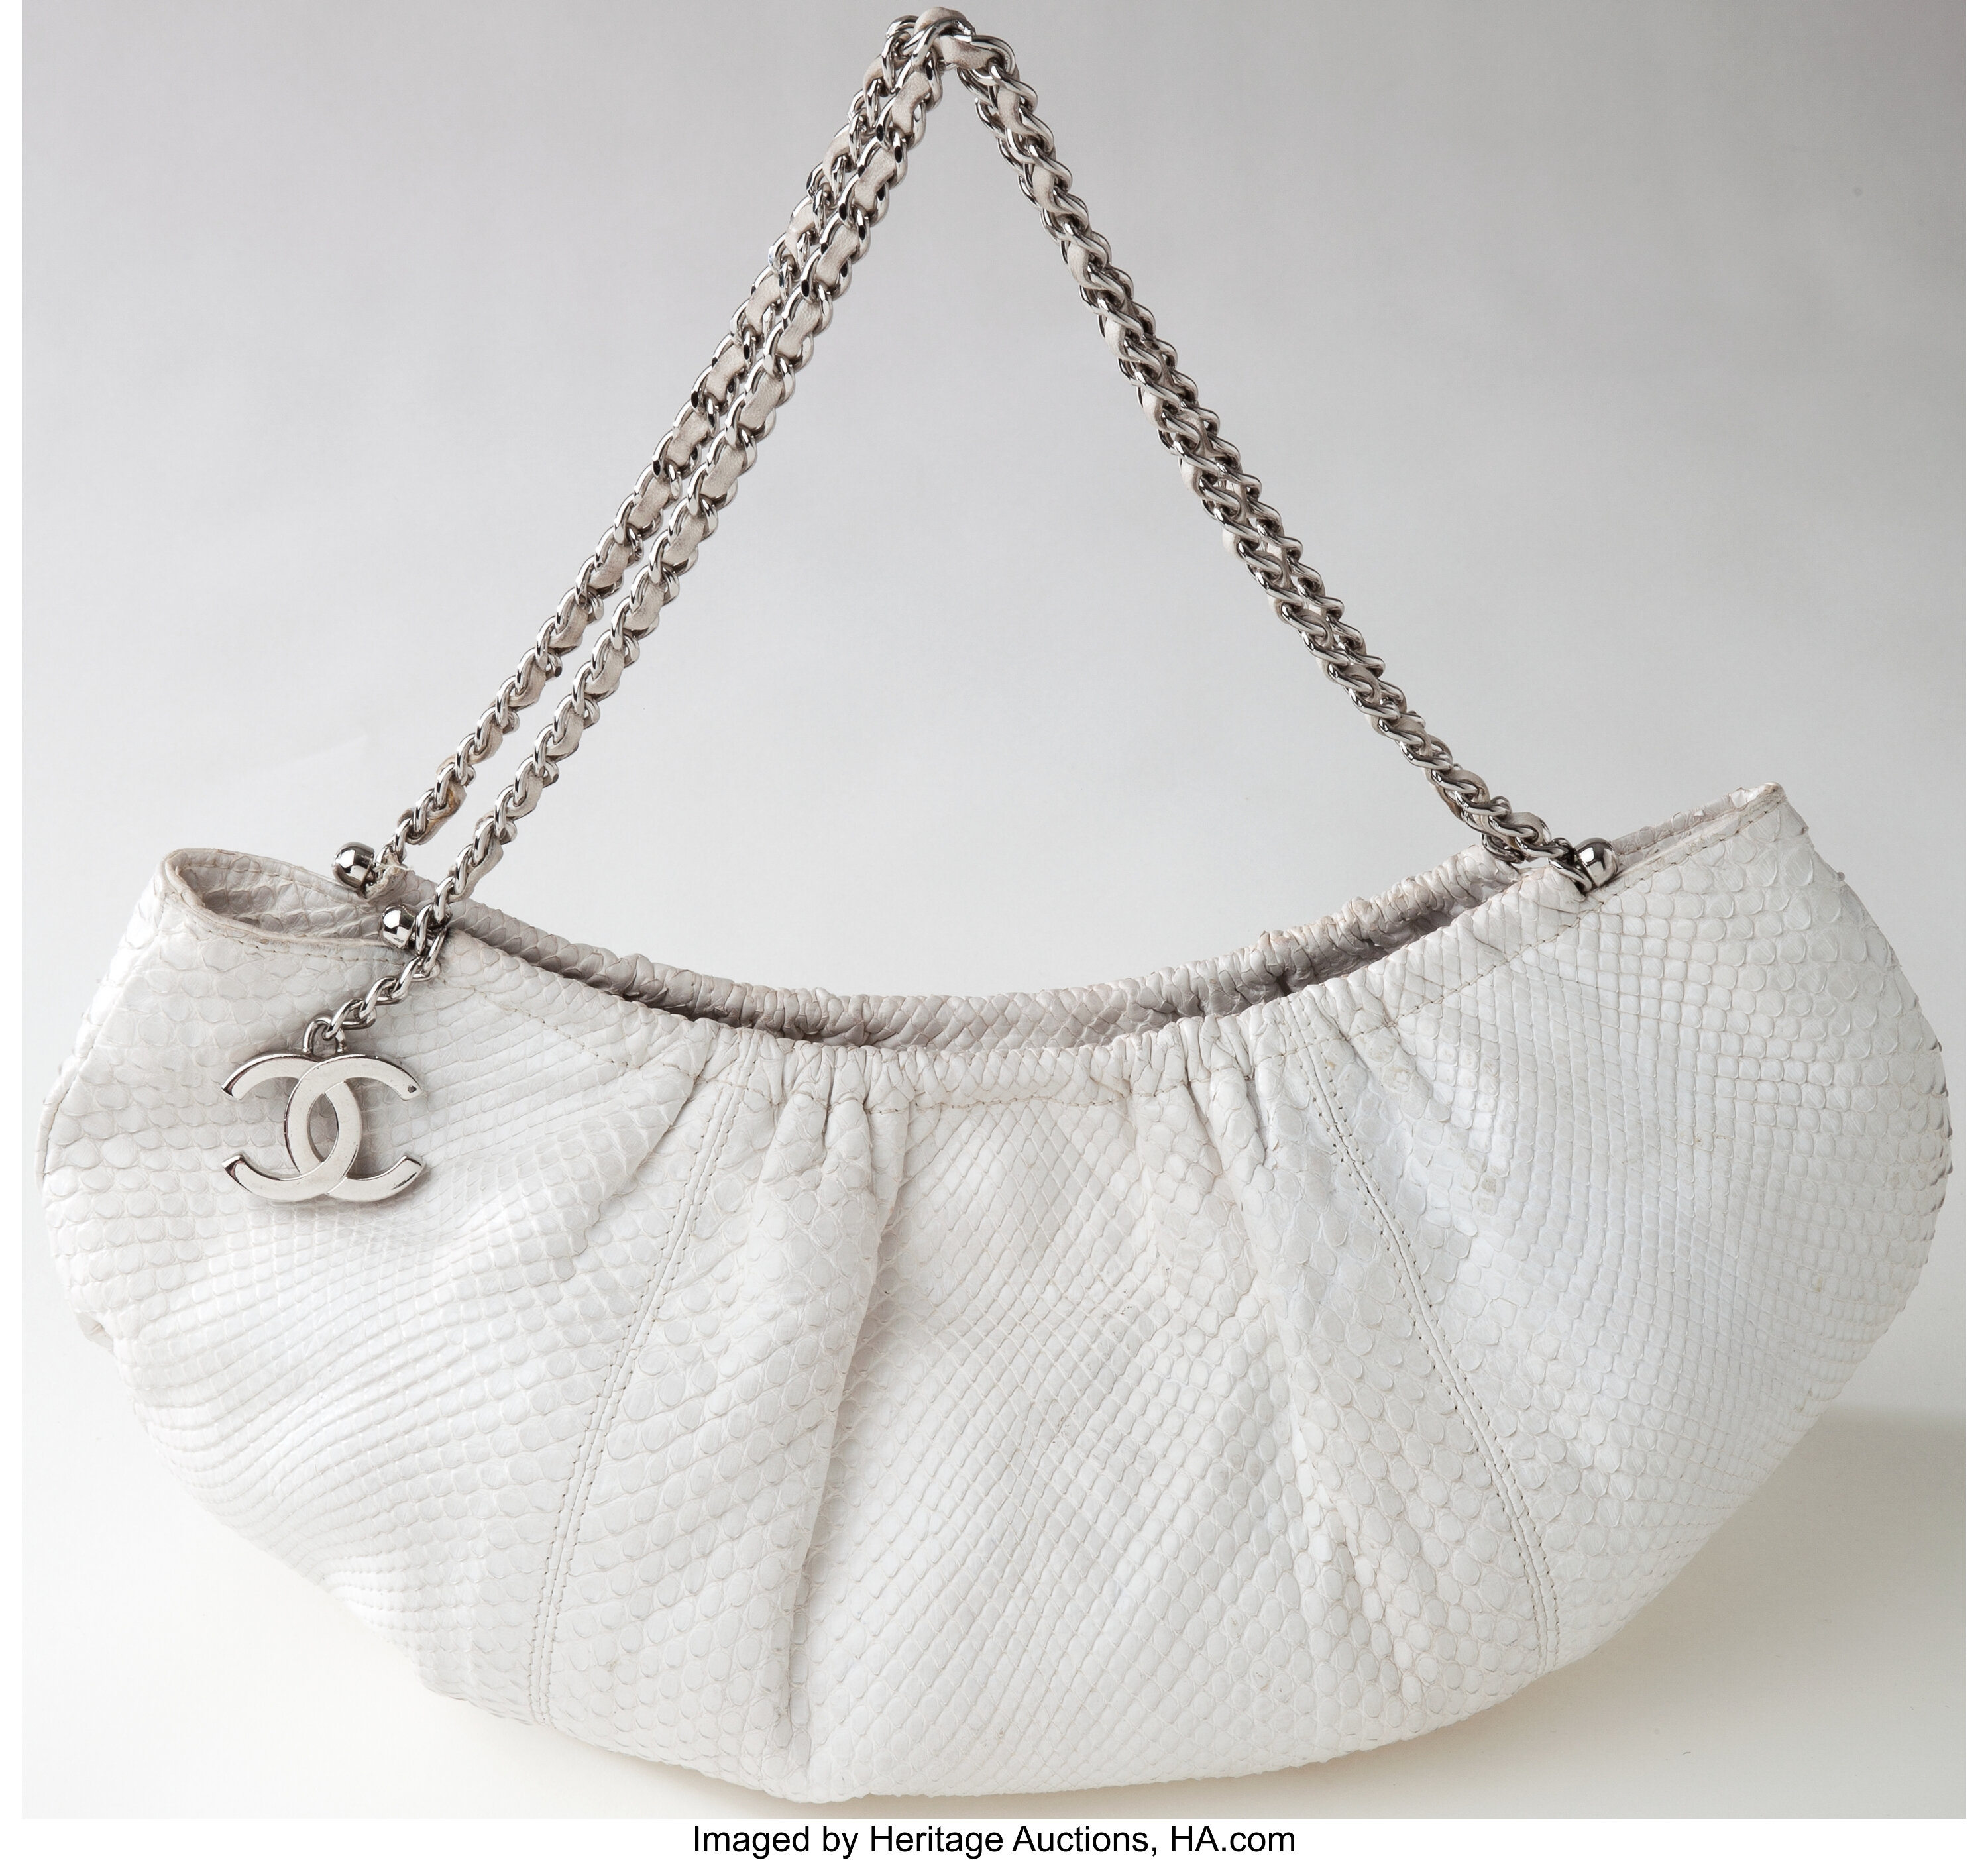 Chanel Rock & Chain Python Hobo Bag - Limited Edition 2007 - Chanel